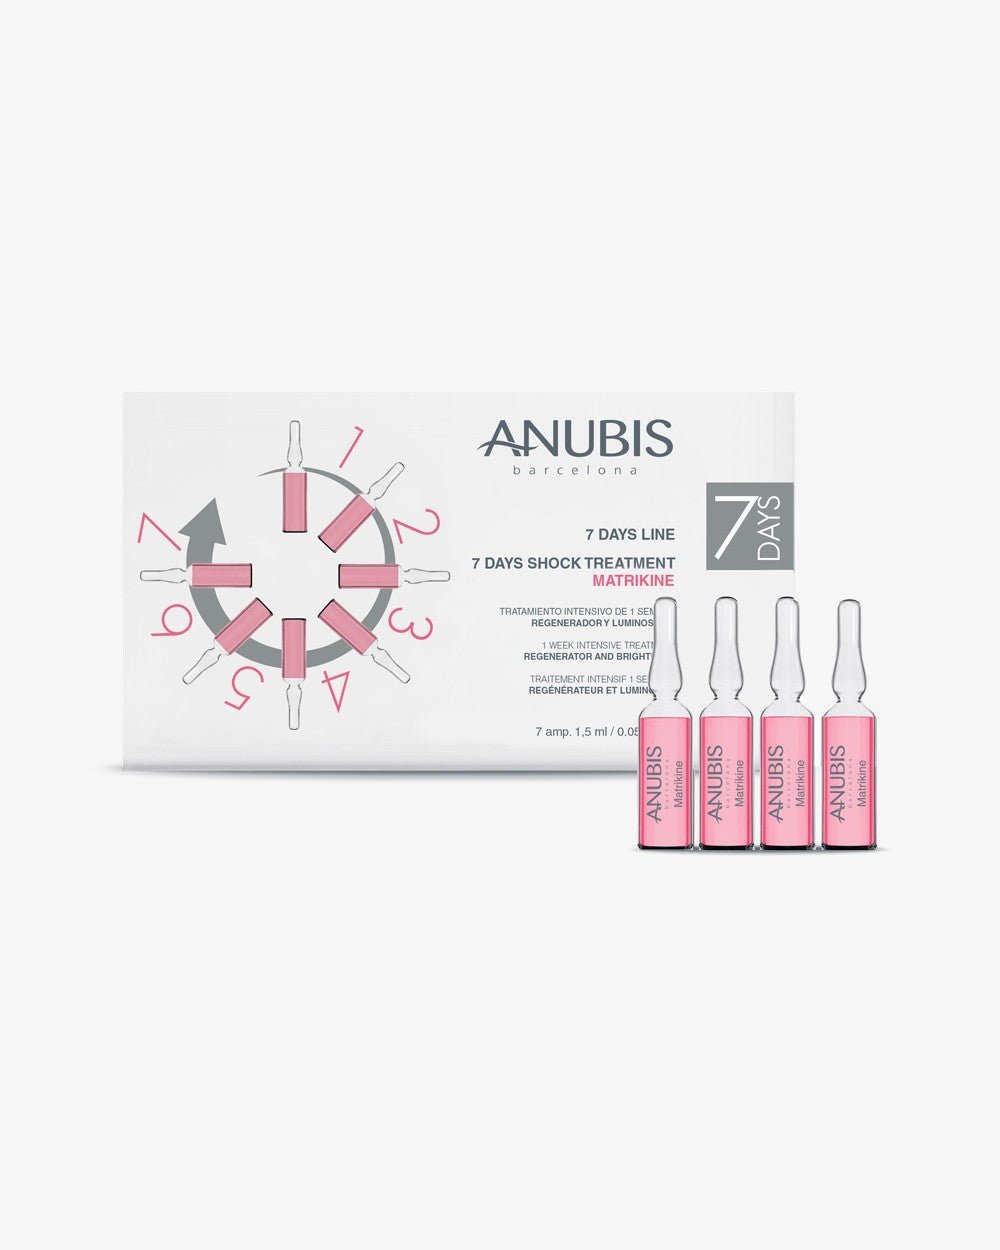 Anubis 7 Days Shock Treatment MATRIKINE - Centro de Estética Itziar y Mariángeles